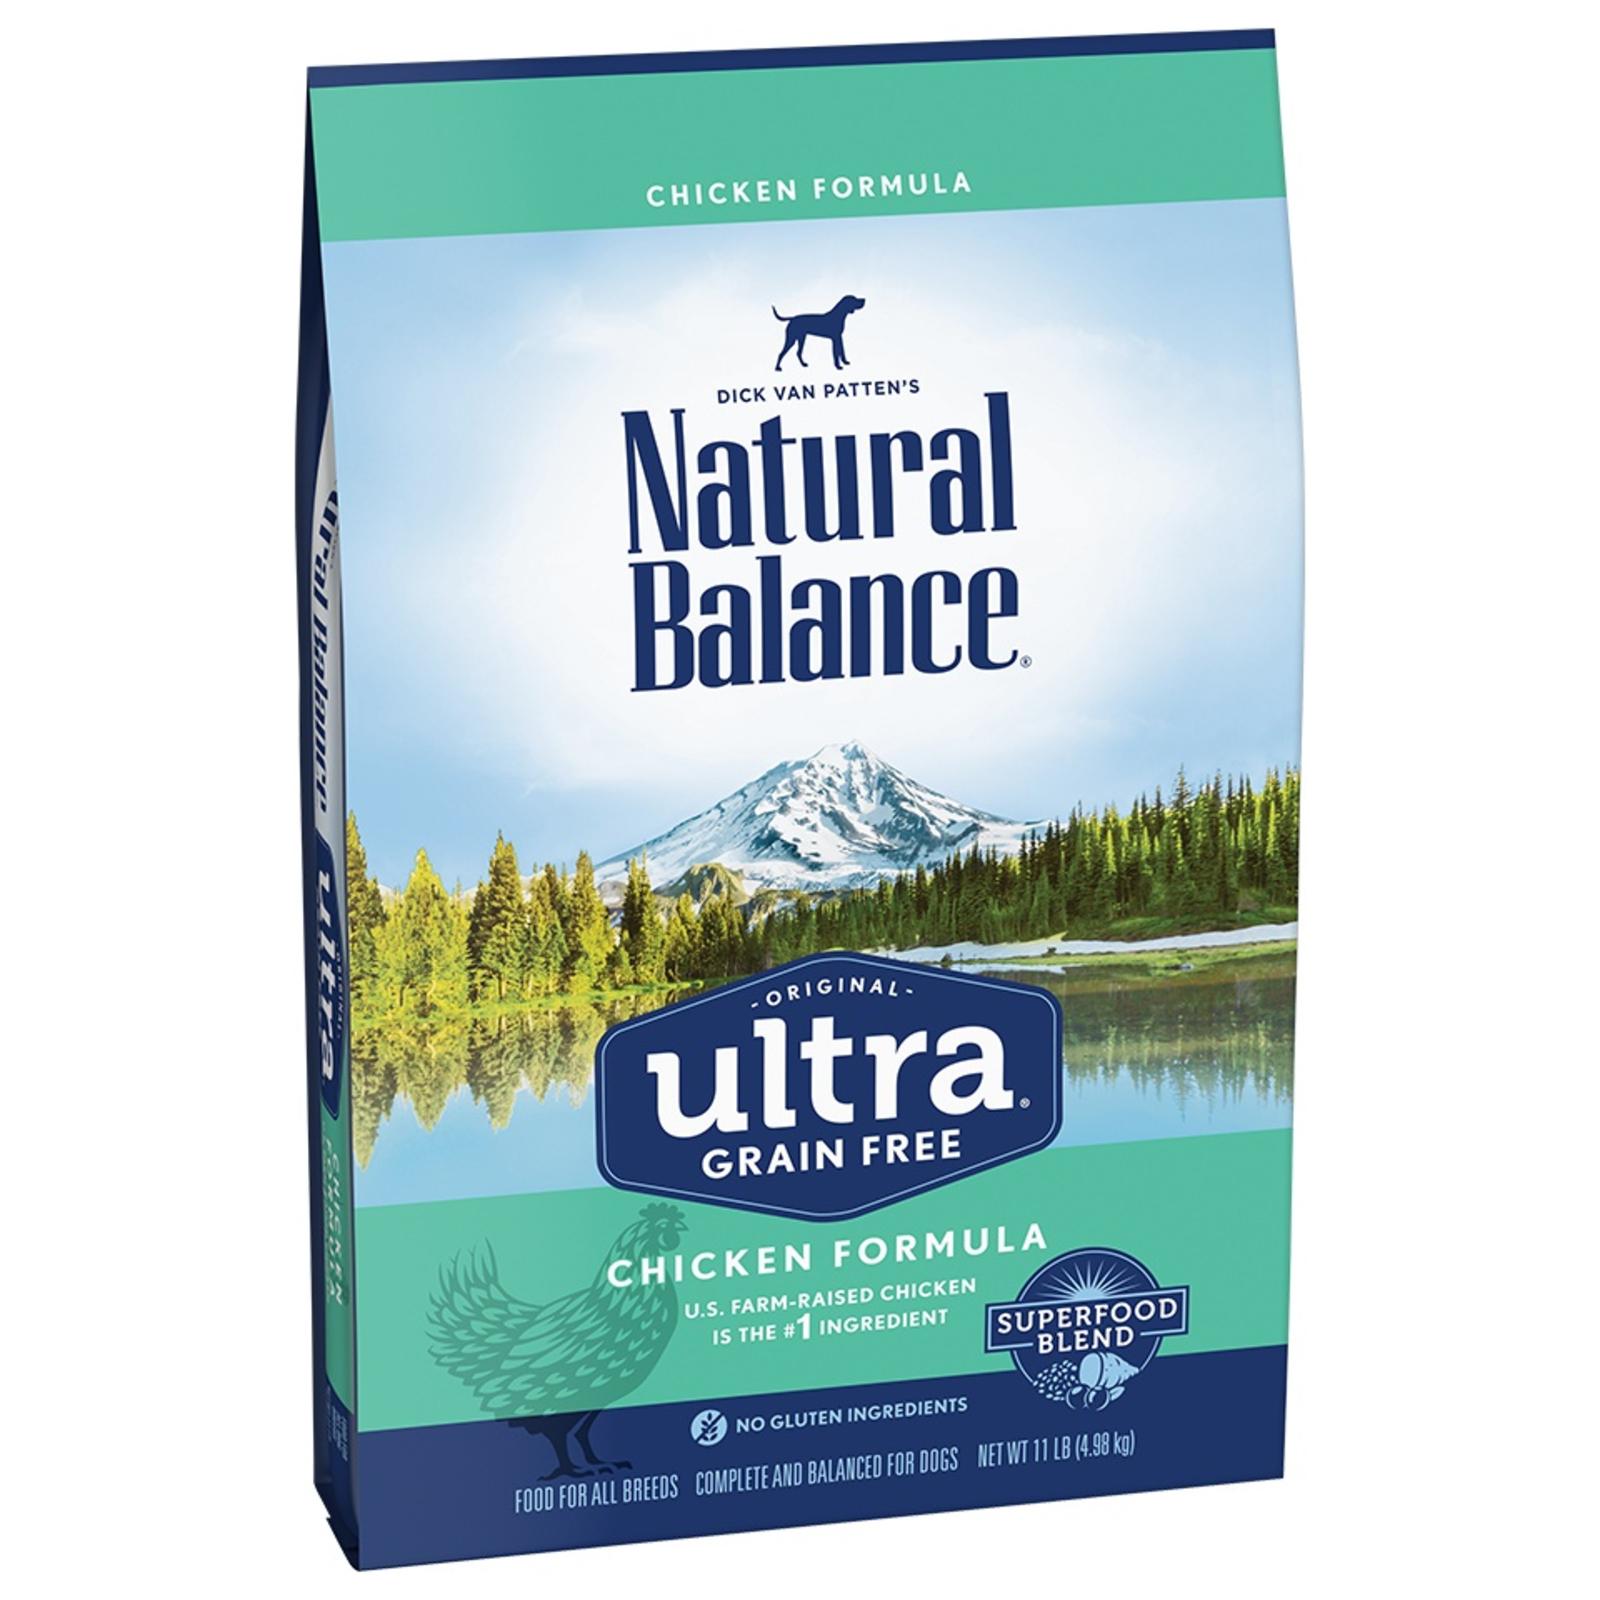 Natural Balance Original Ultra™ Grain Free Chicken Formula